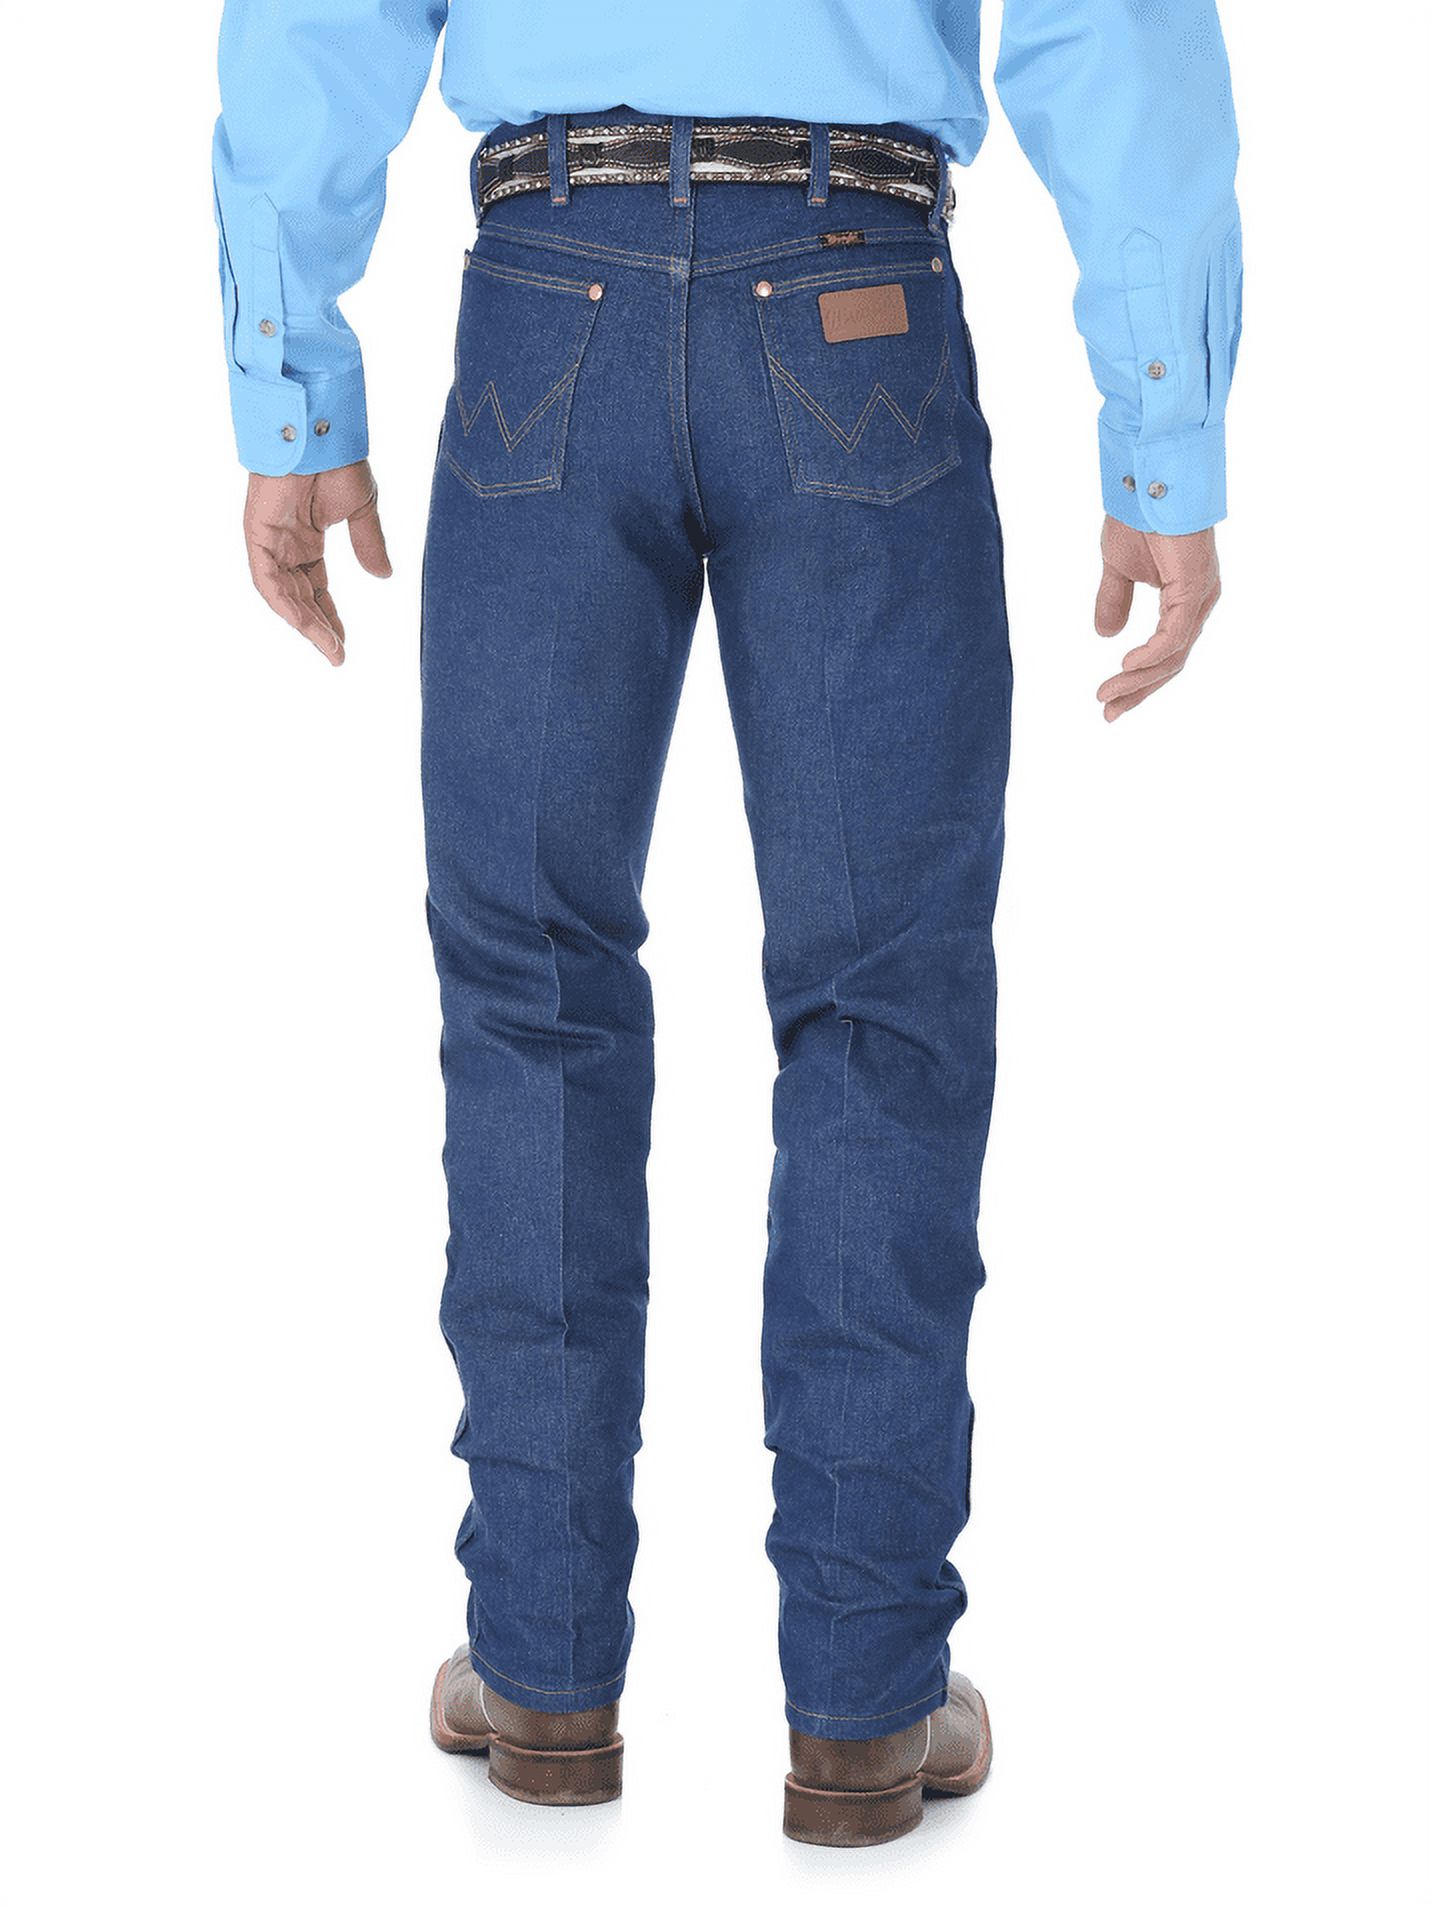 Wrangler Men's Cowboy Cut Original Straight Fit Jean - image 4 of 4